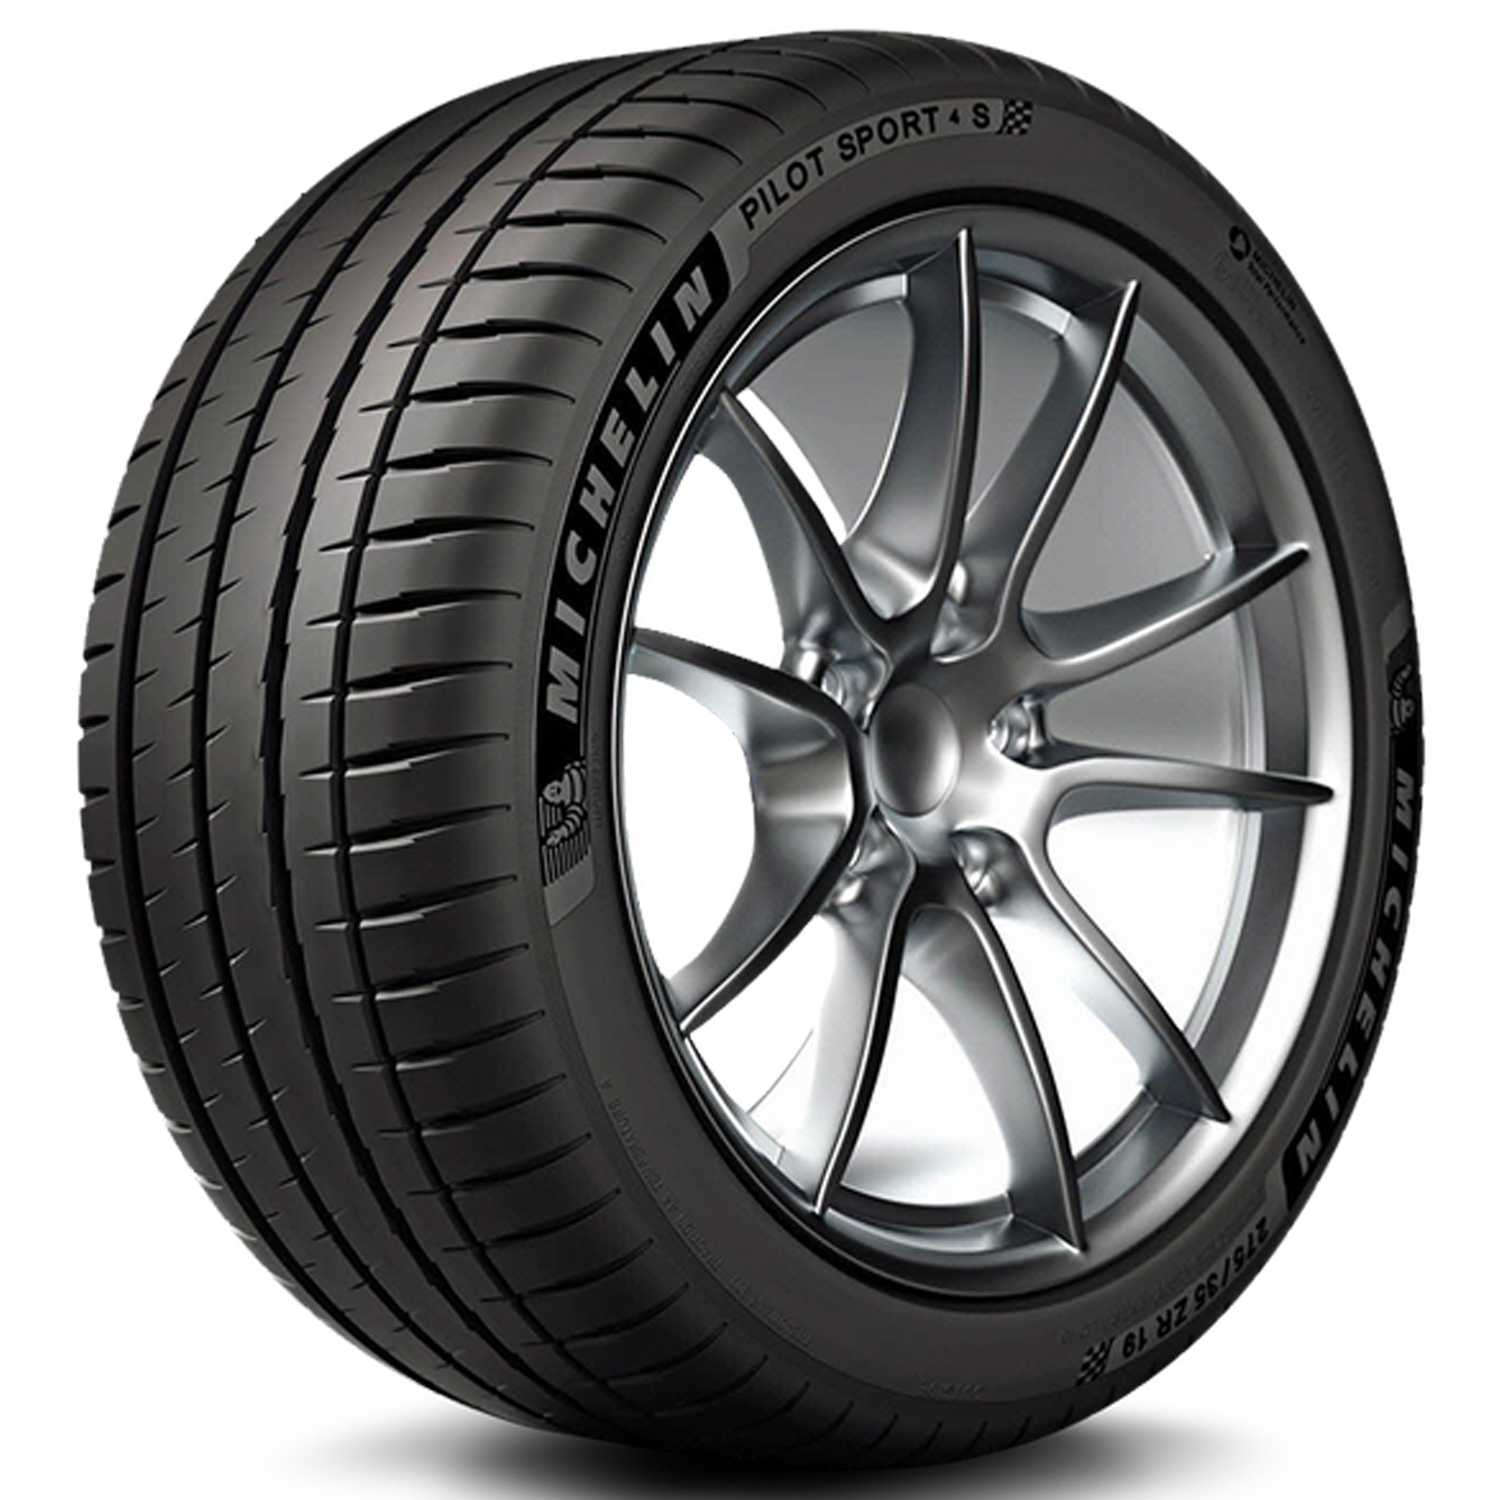 Michelin Pilot Sport 4S Performance 215/45ZR17 (91Y) XL Passenger Tire - image 1 of 5